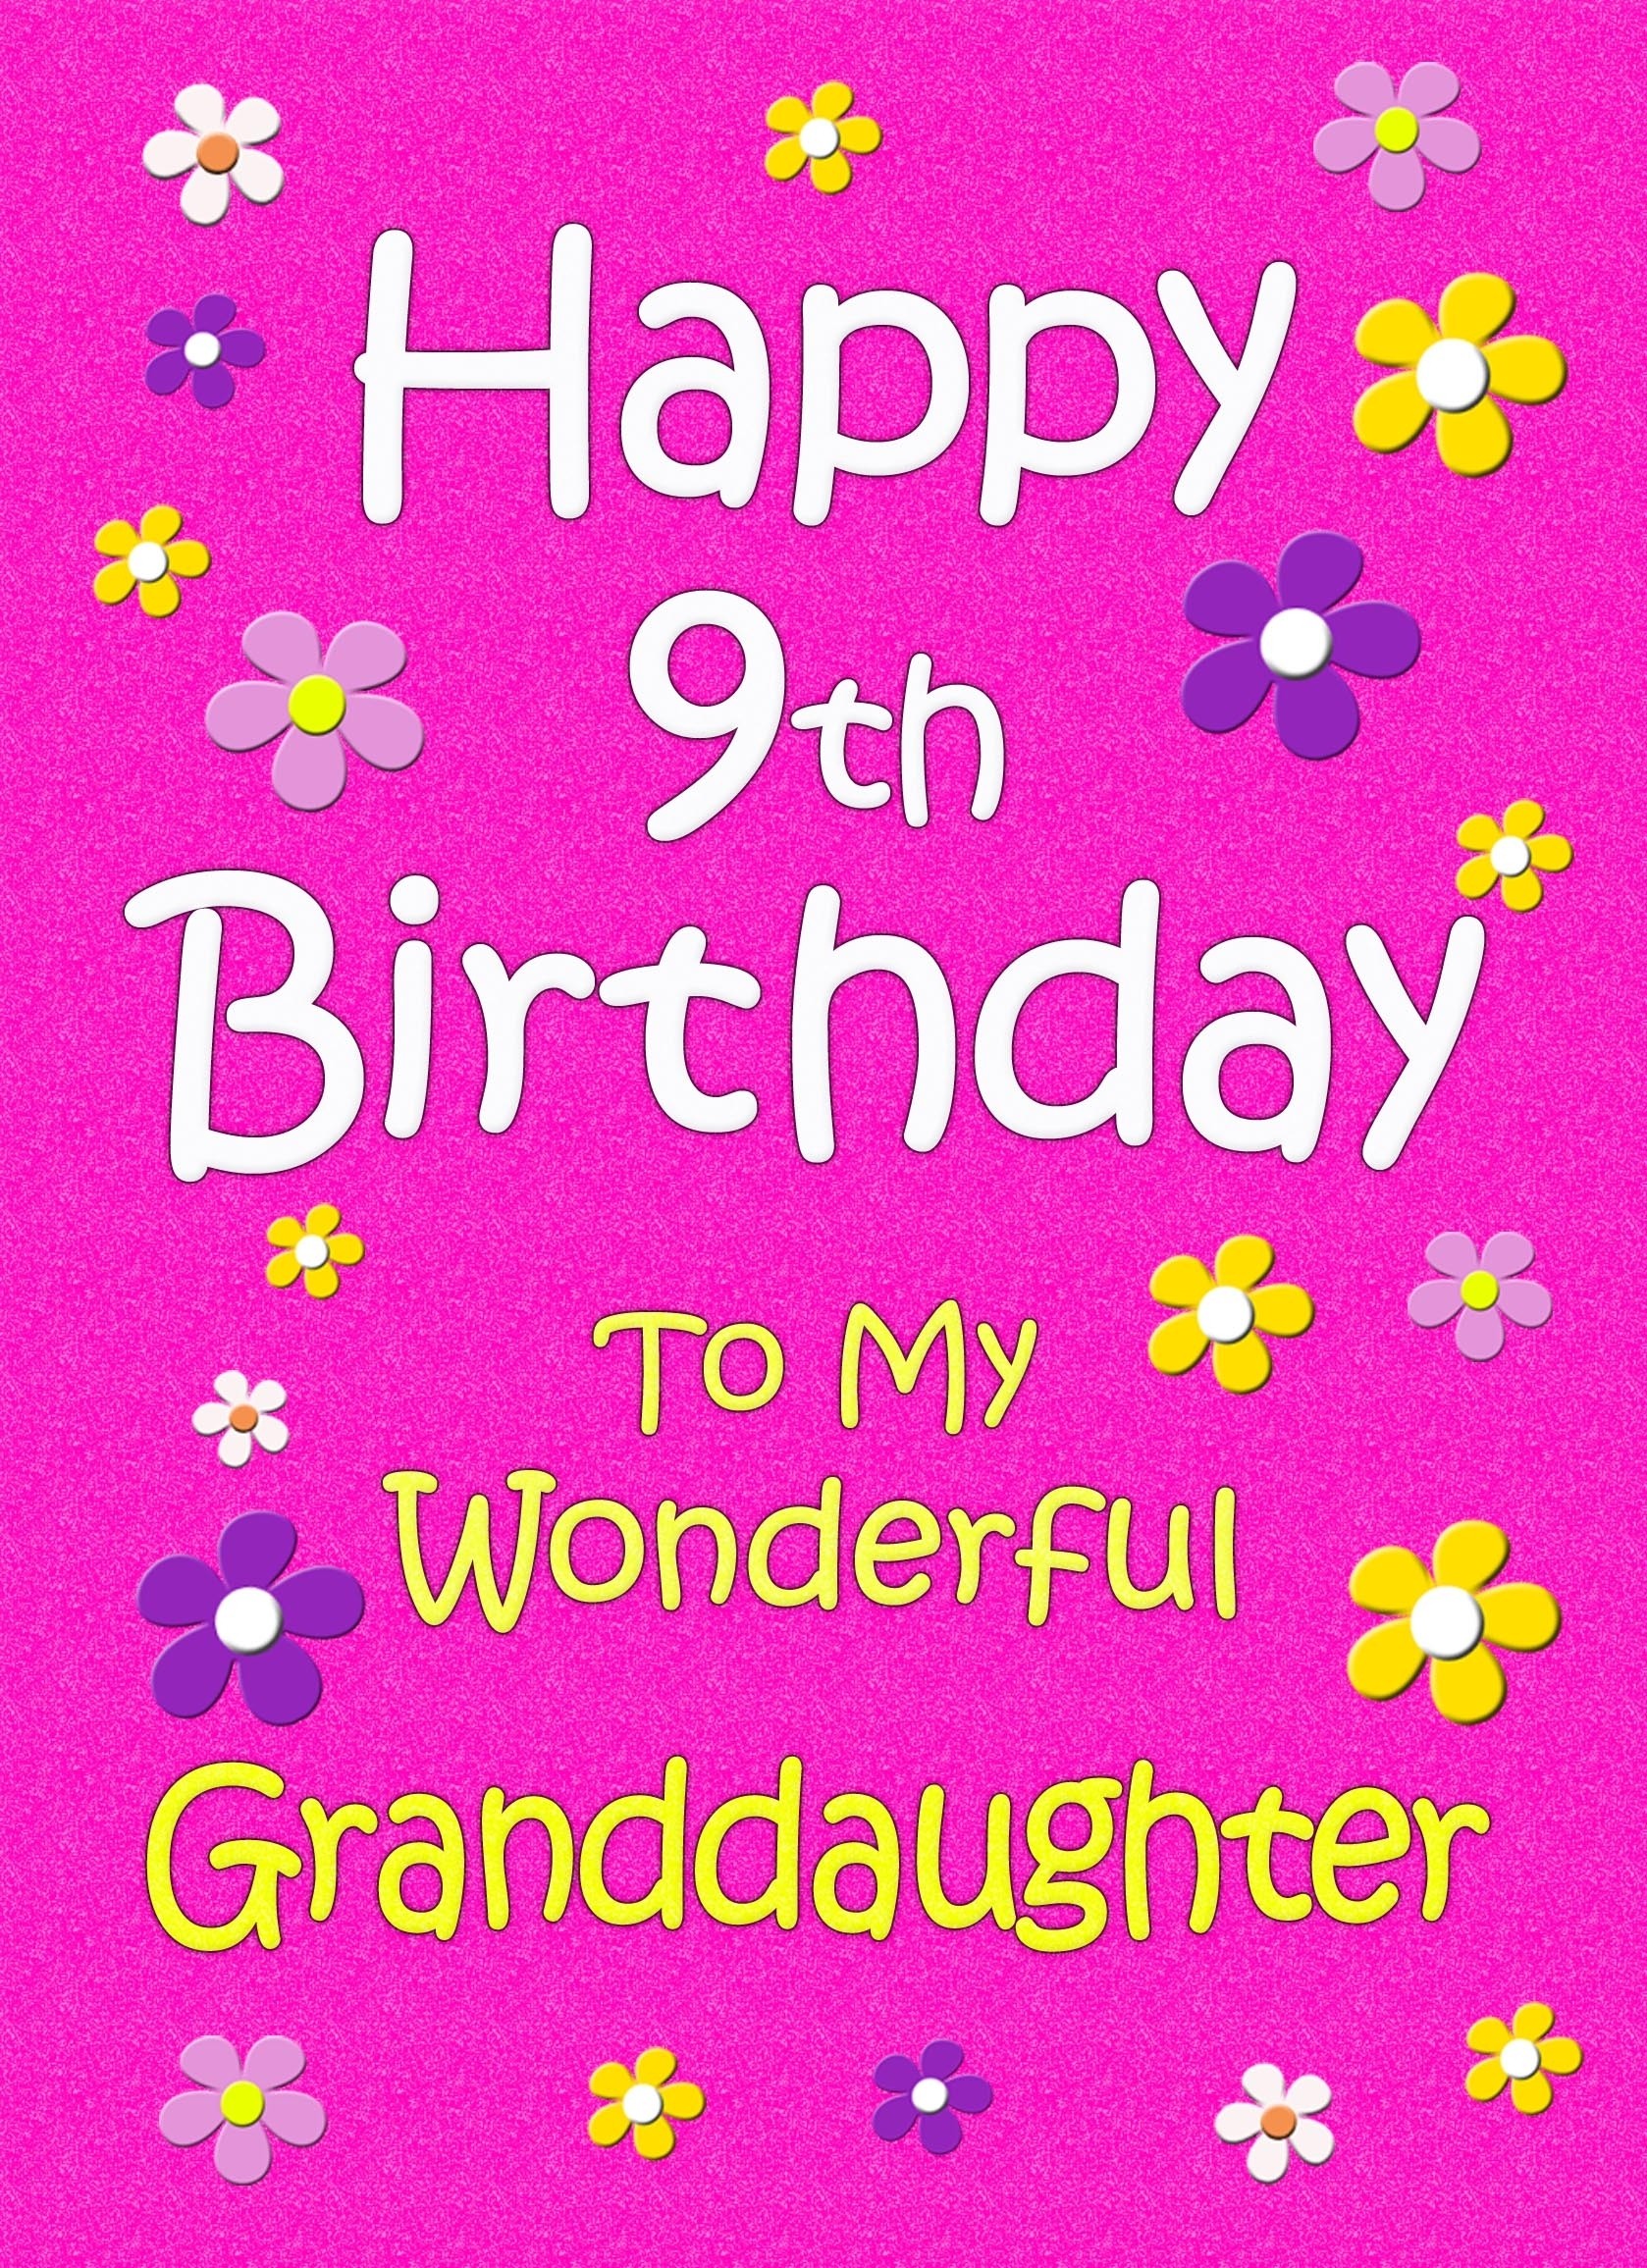 Granddaughter 9th Birthday Card (Pink)